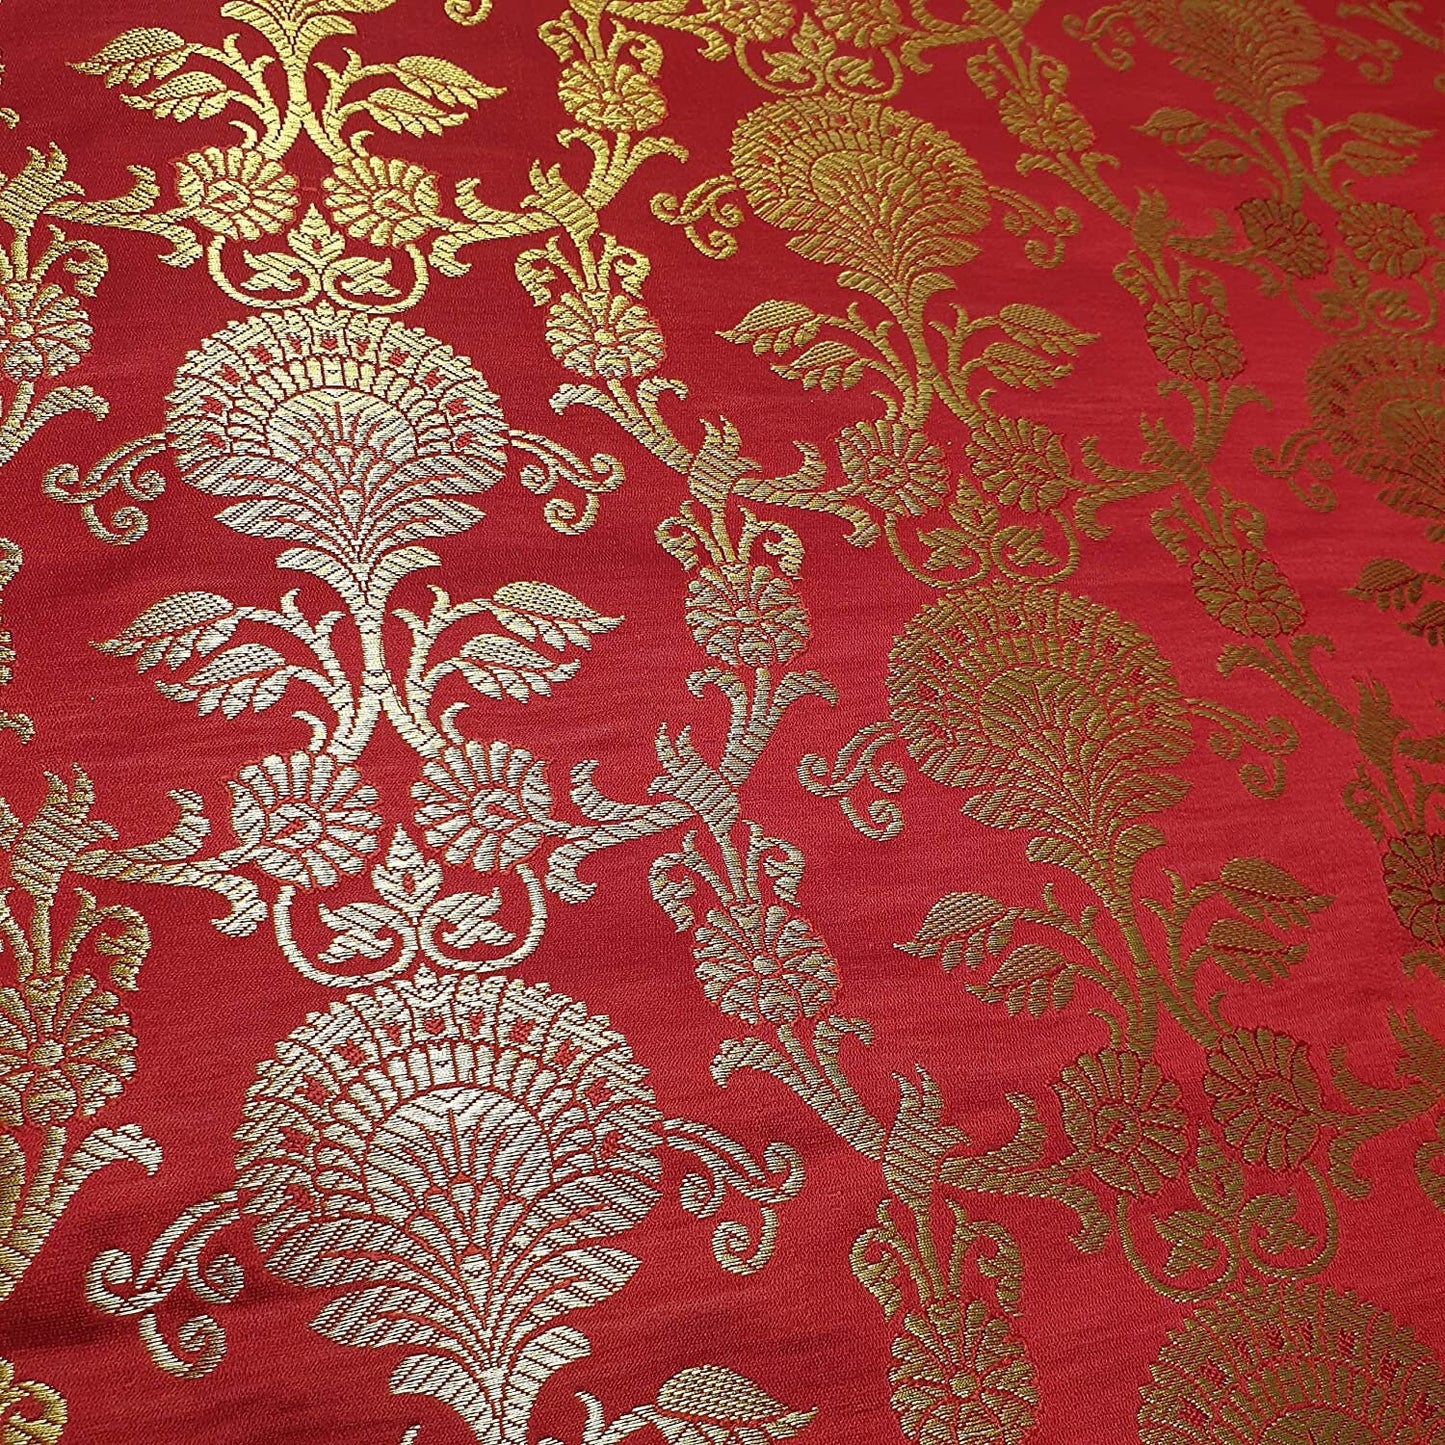 Ornamental Floral Gold Metallic Print Indian Banarasi Brocade Fabric (Red)